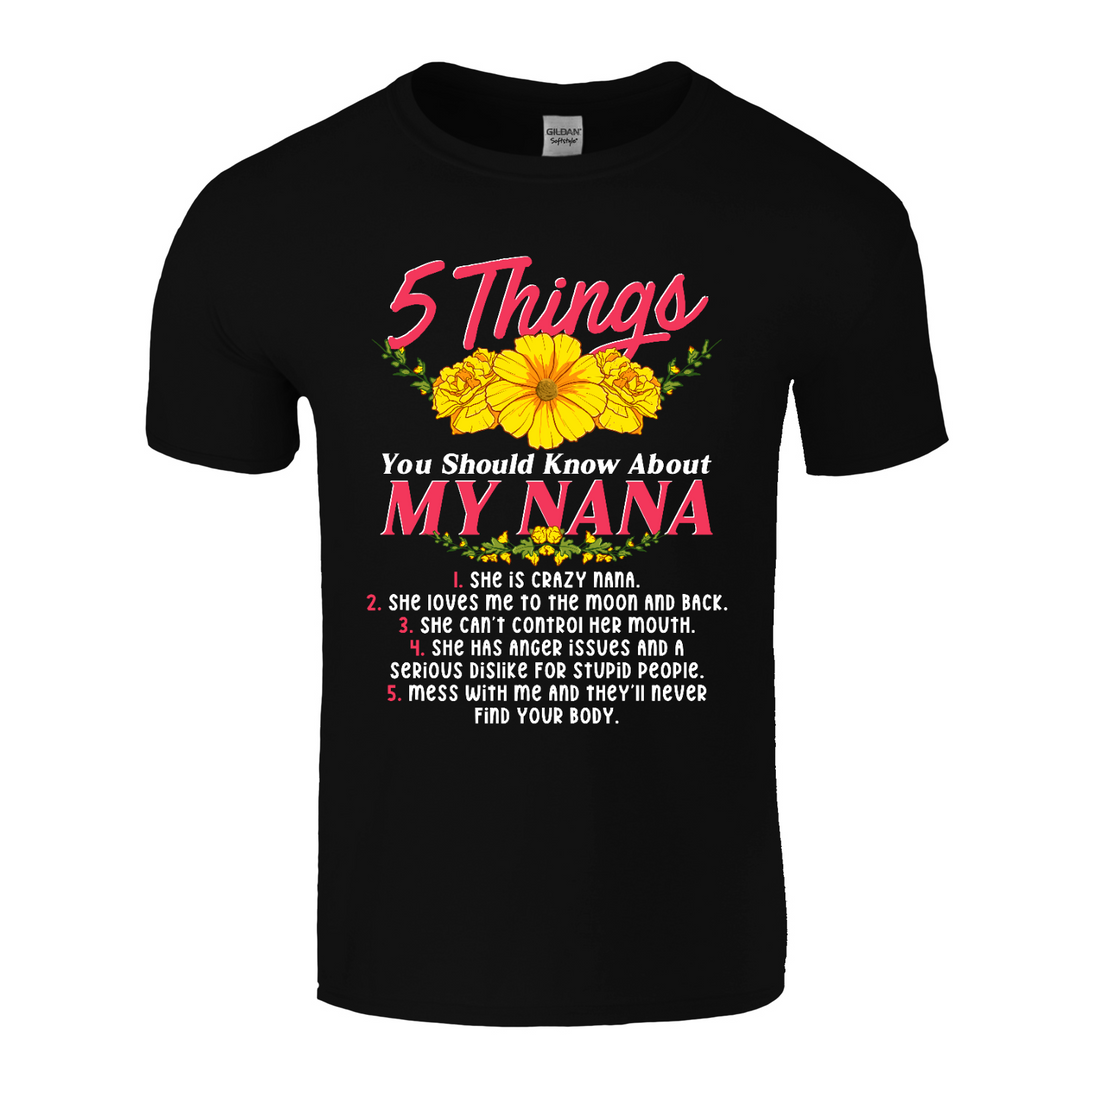 5 Things About Nana | Black Tee Shirt